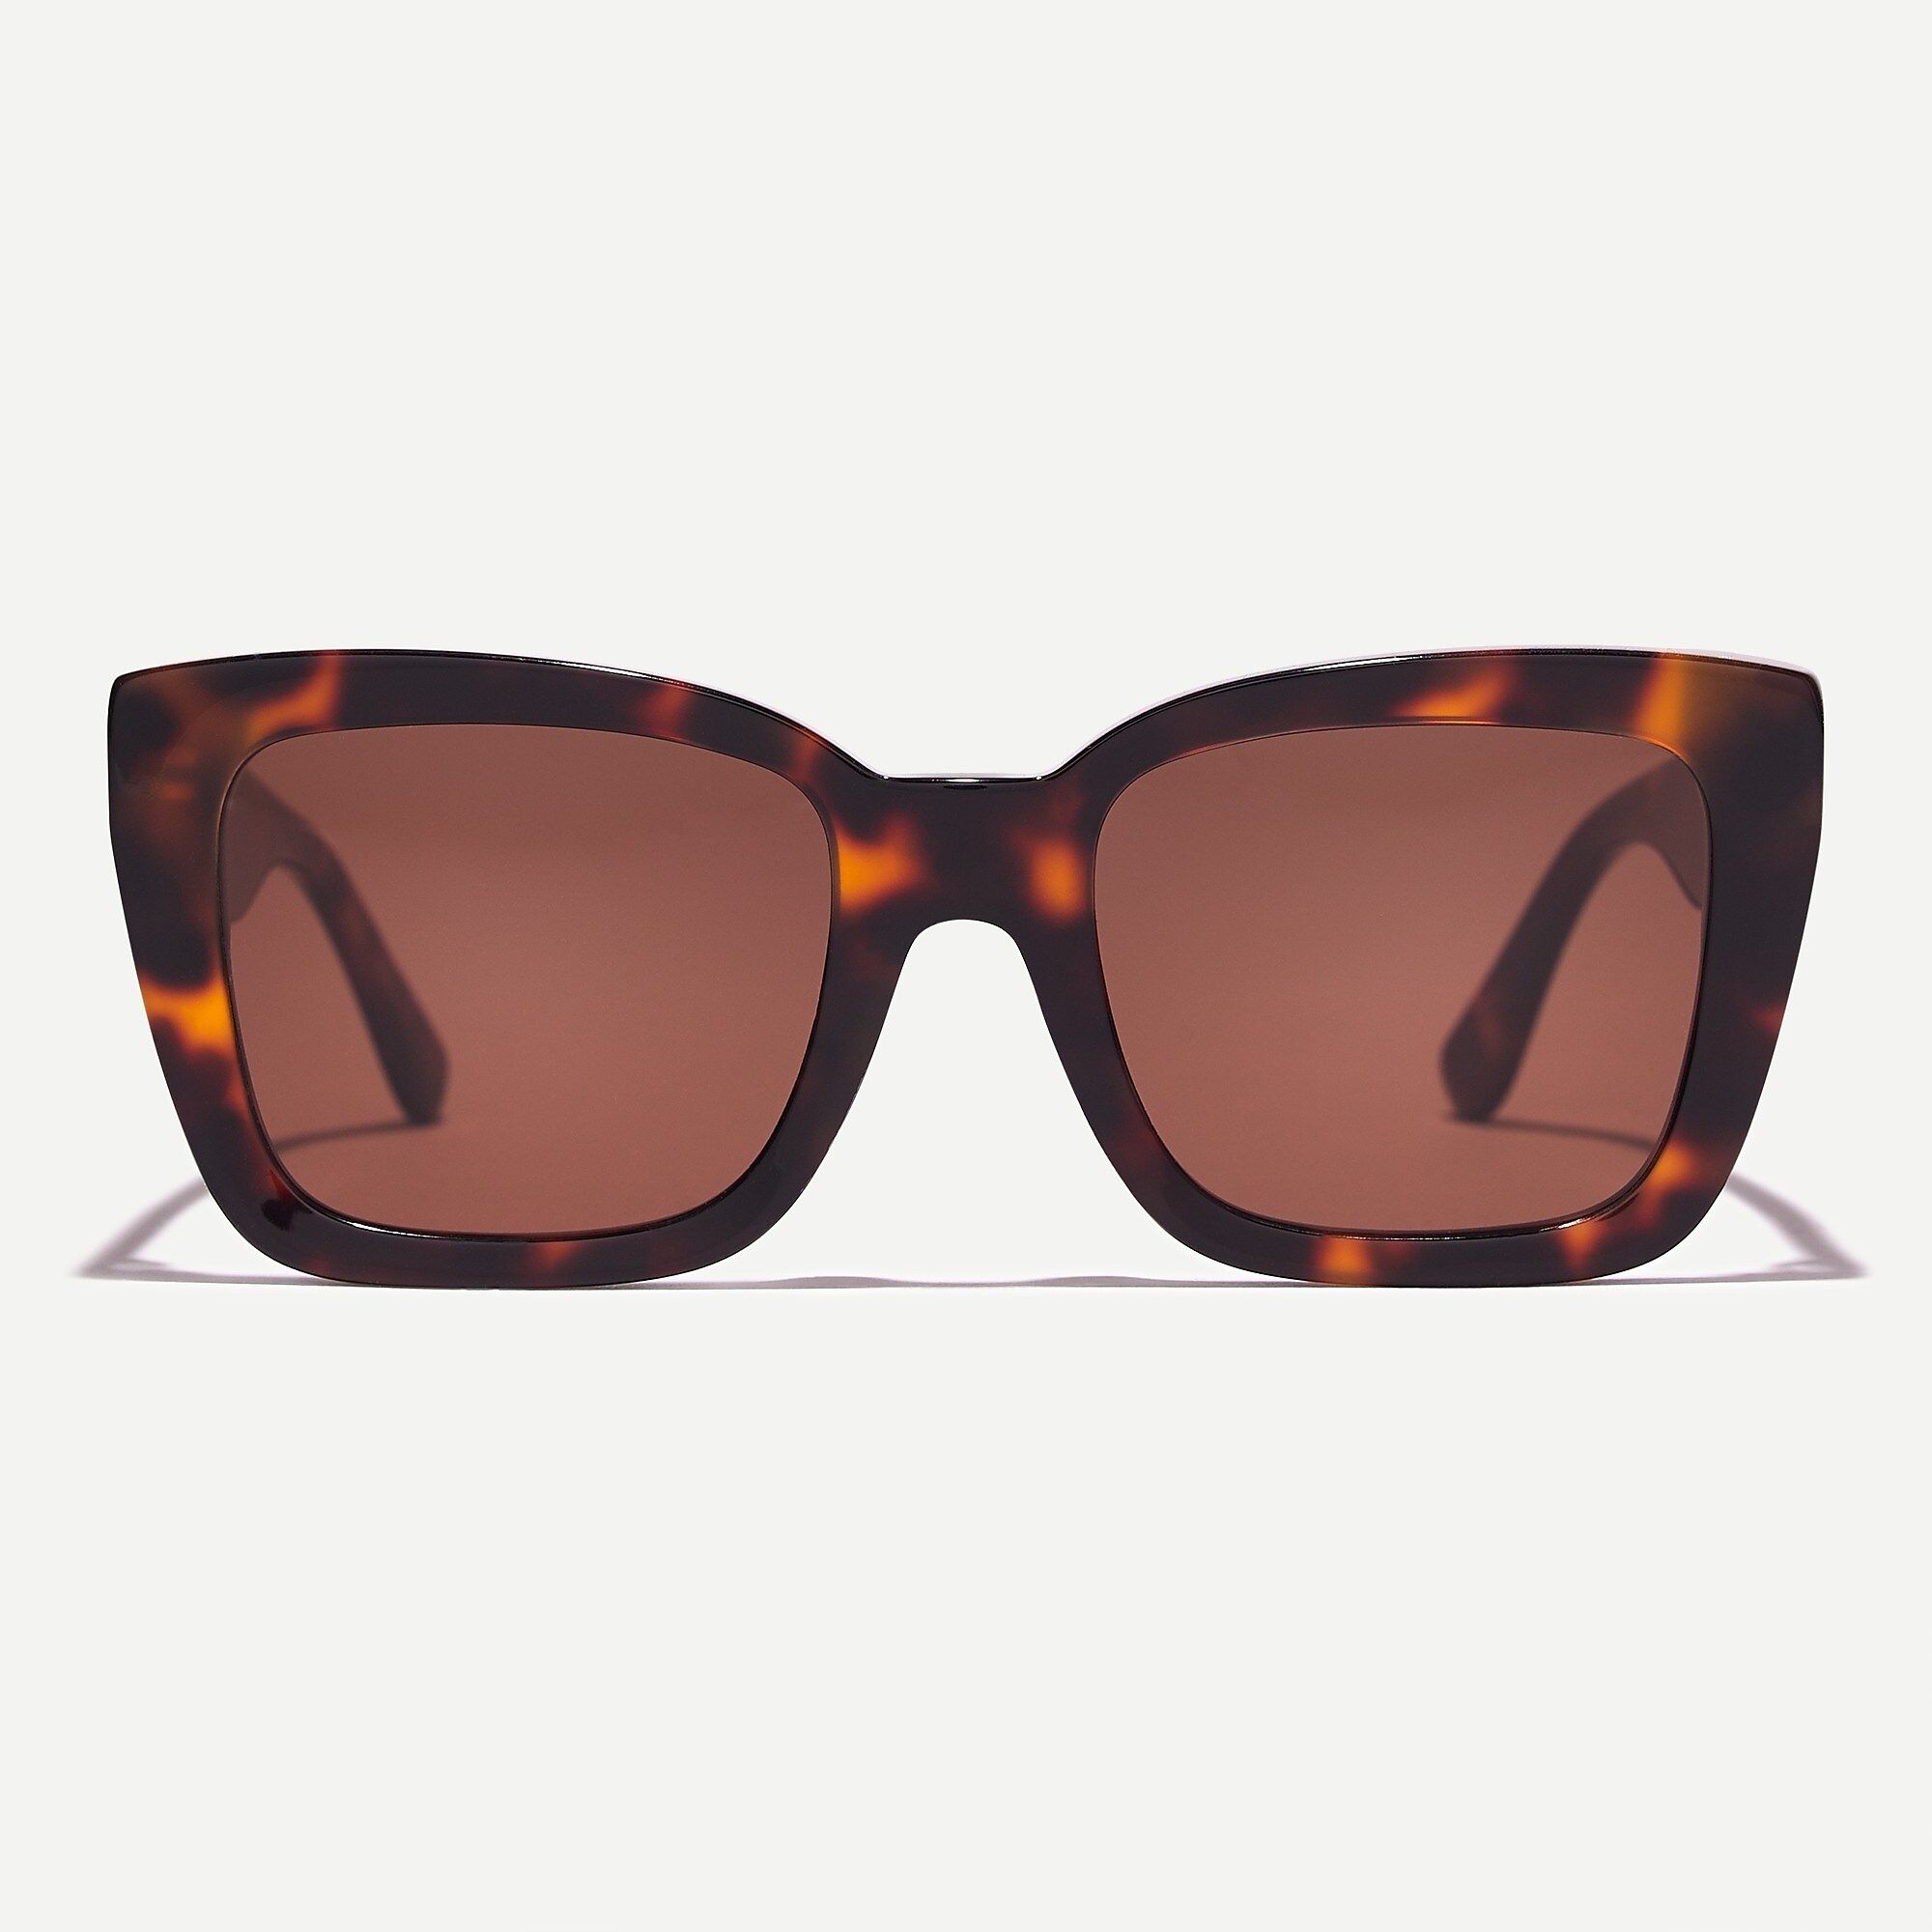 Oversized square sunglasses | J.Crew US